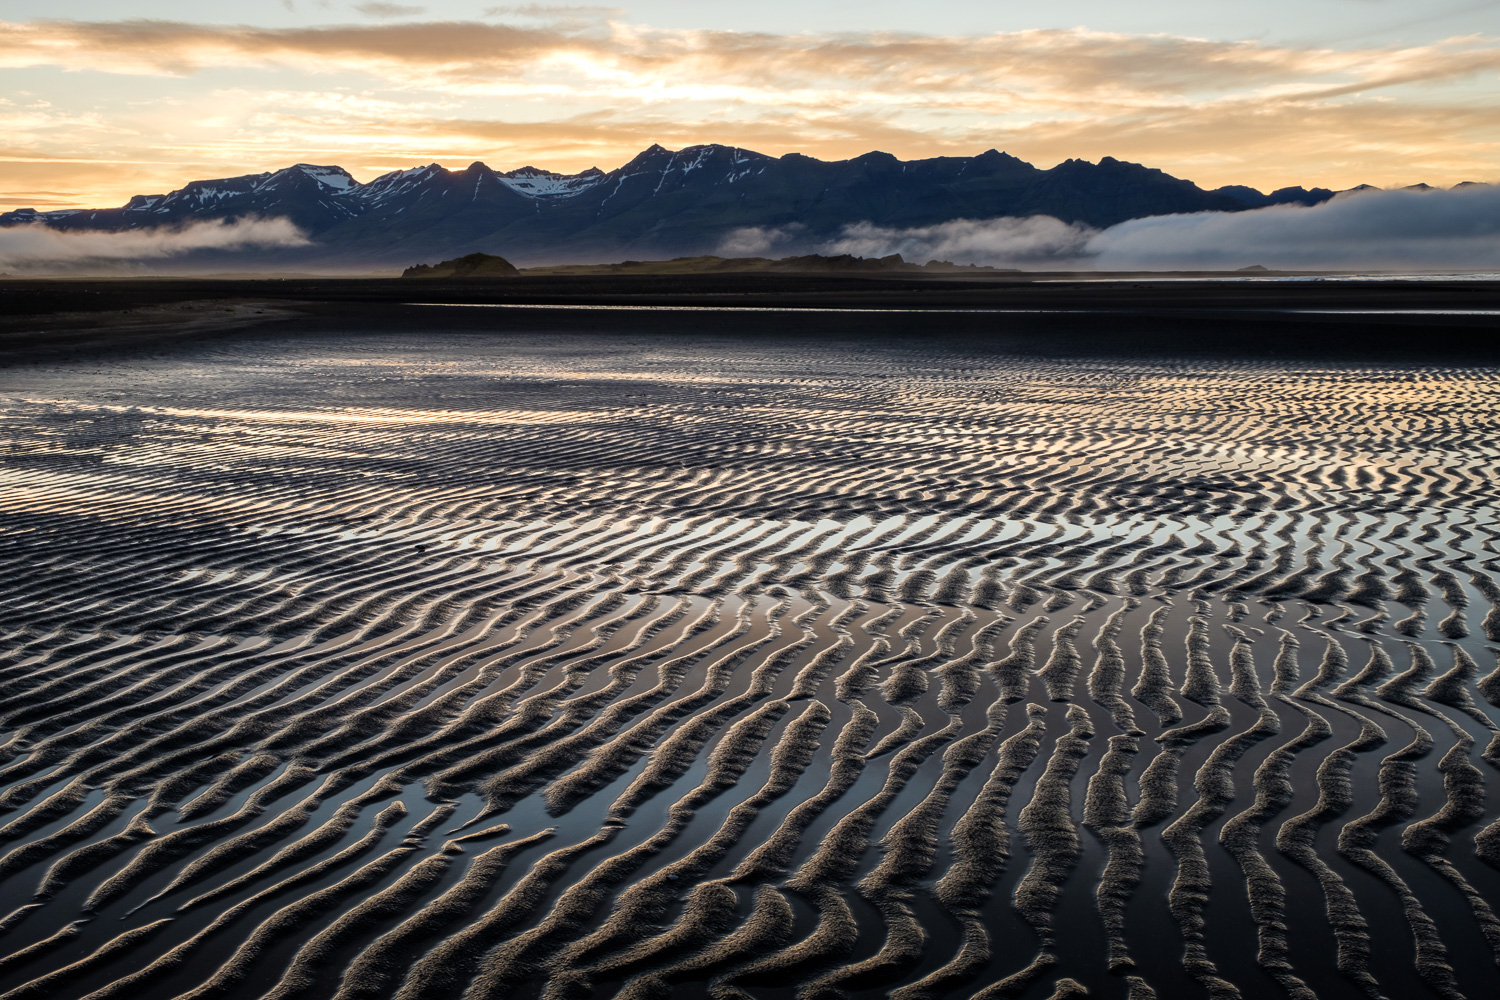  Sandy ripples and mountains on the Laekjavik coast 